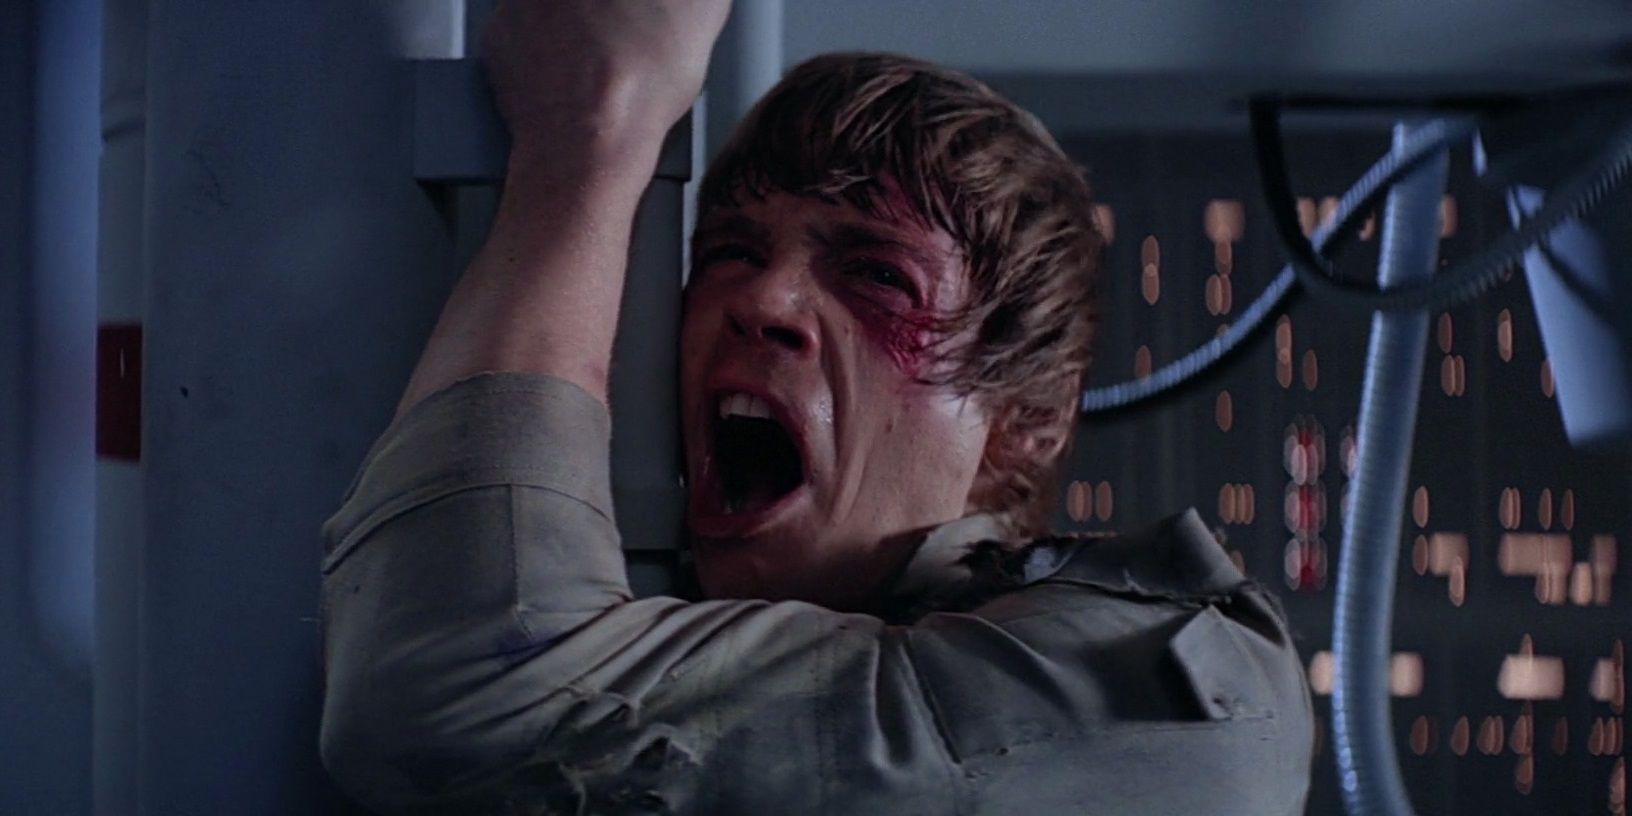 Luke Skywalker screaming no in Star Wars The Empire Strikes Back